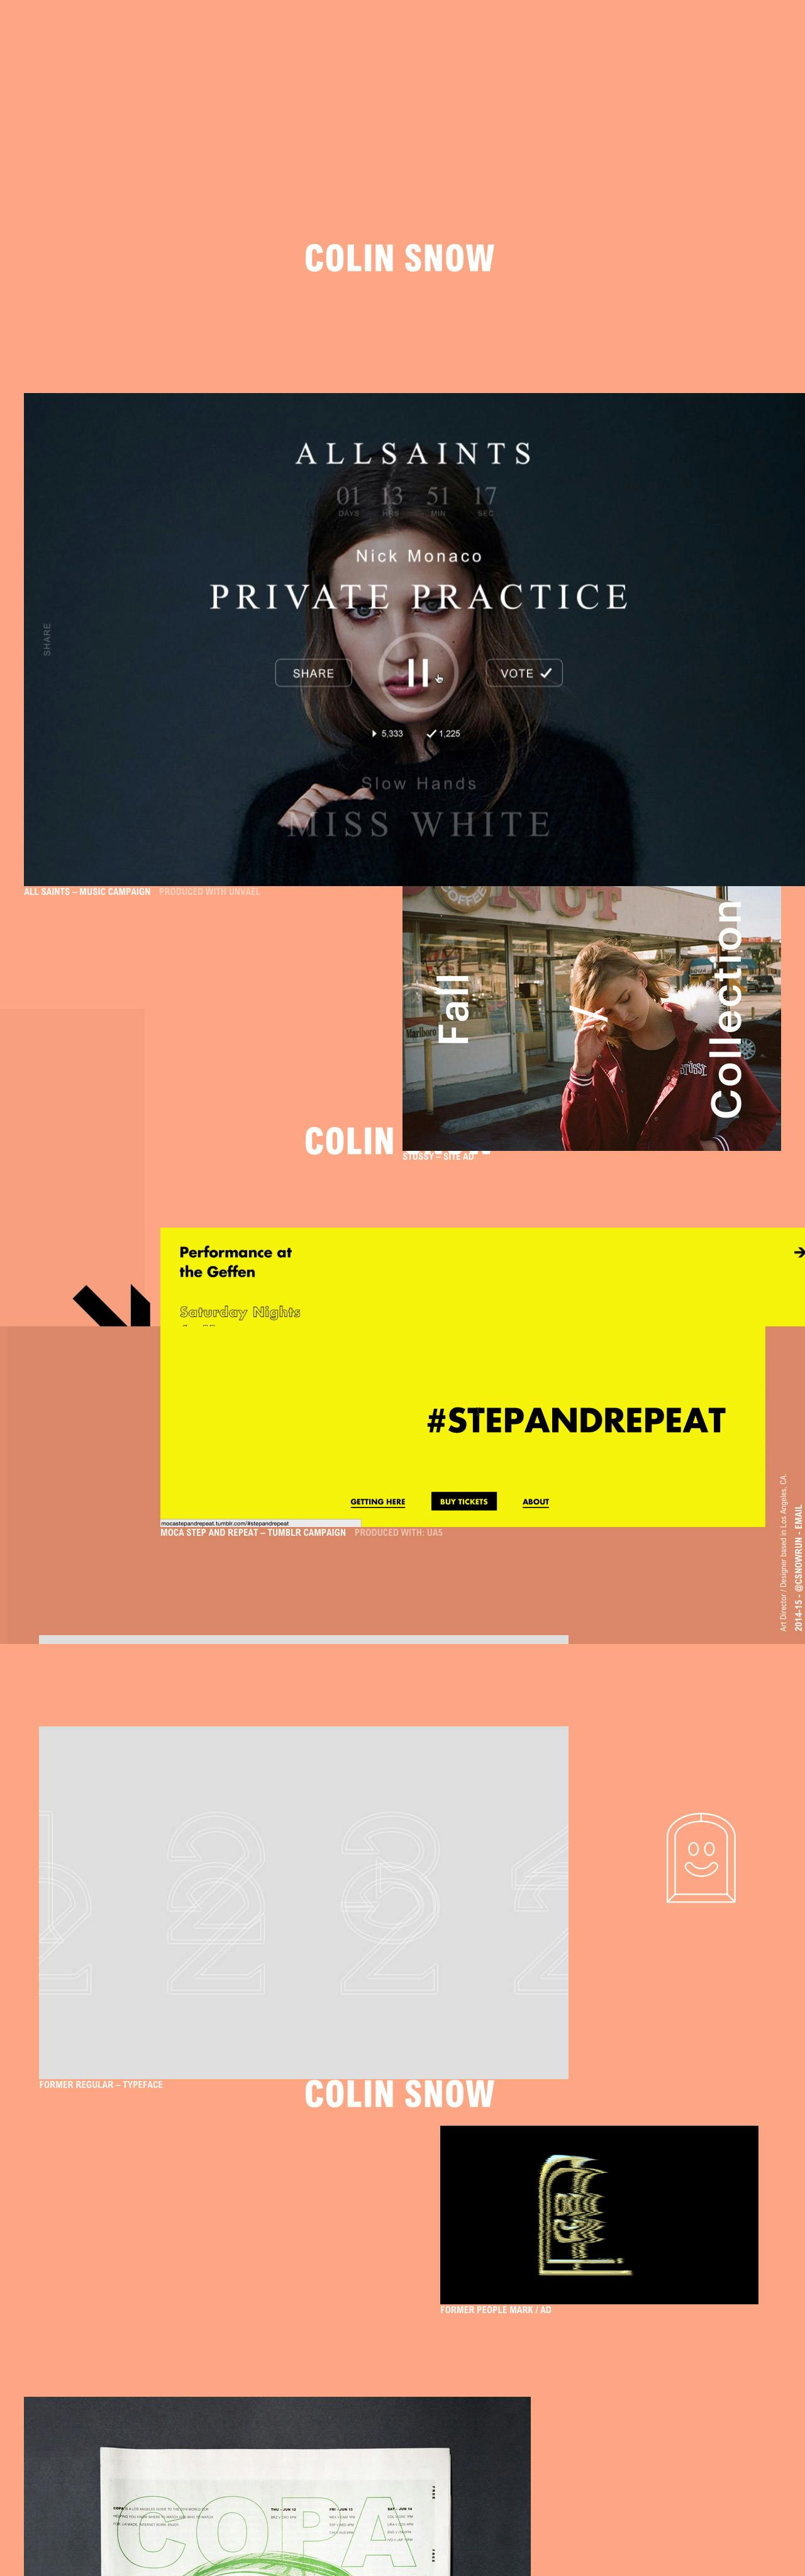 Colin Snow Website Screenshot